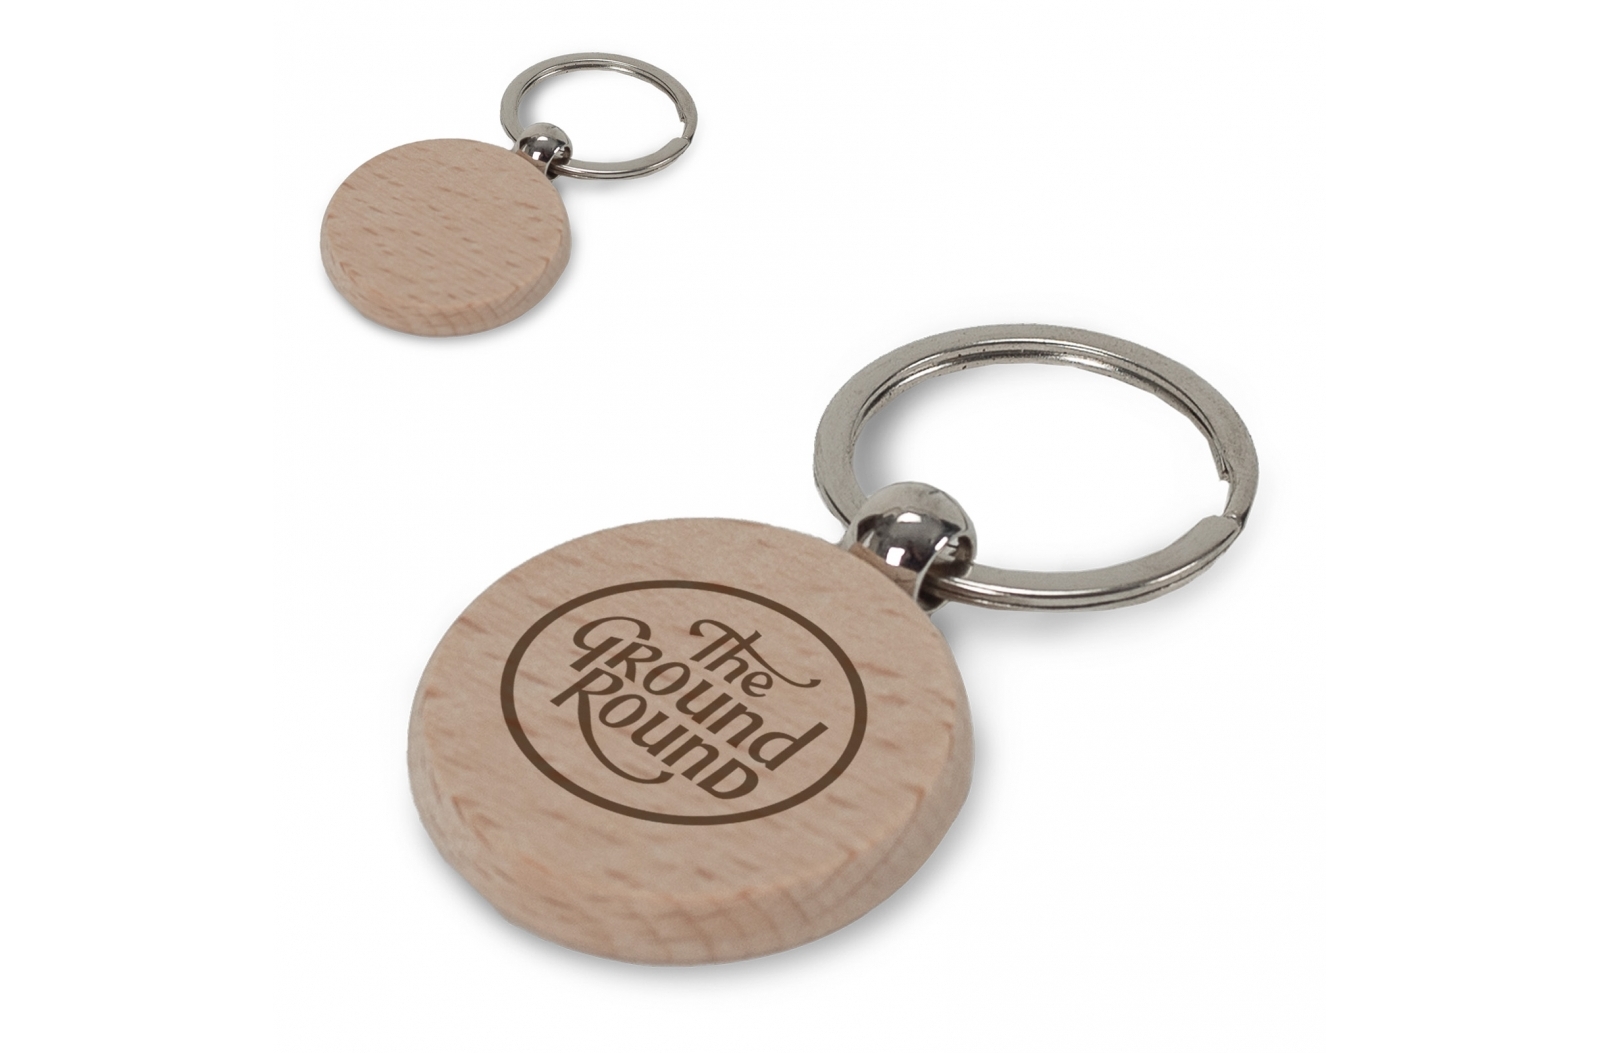 Wooden Tag Key Ring - Great Mongeham